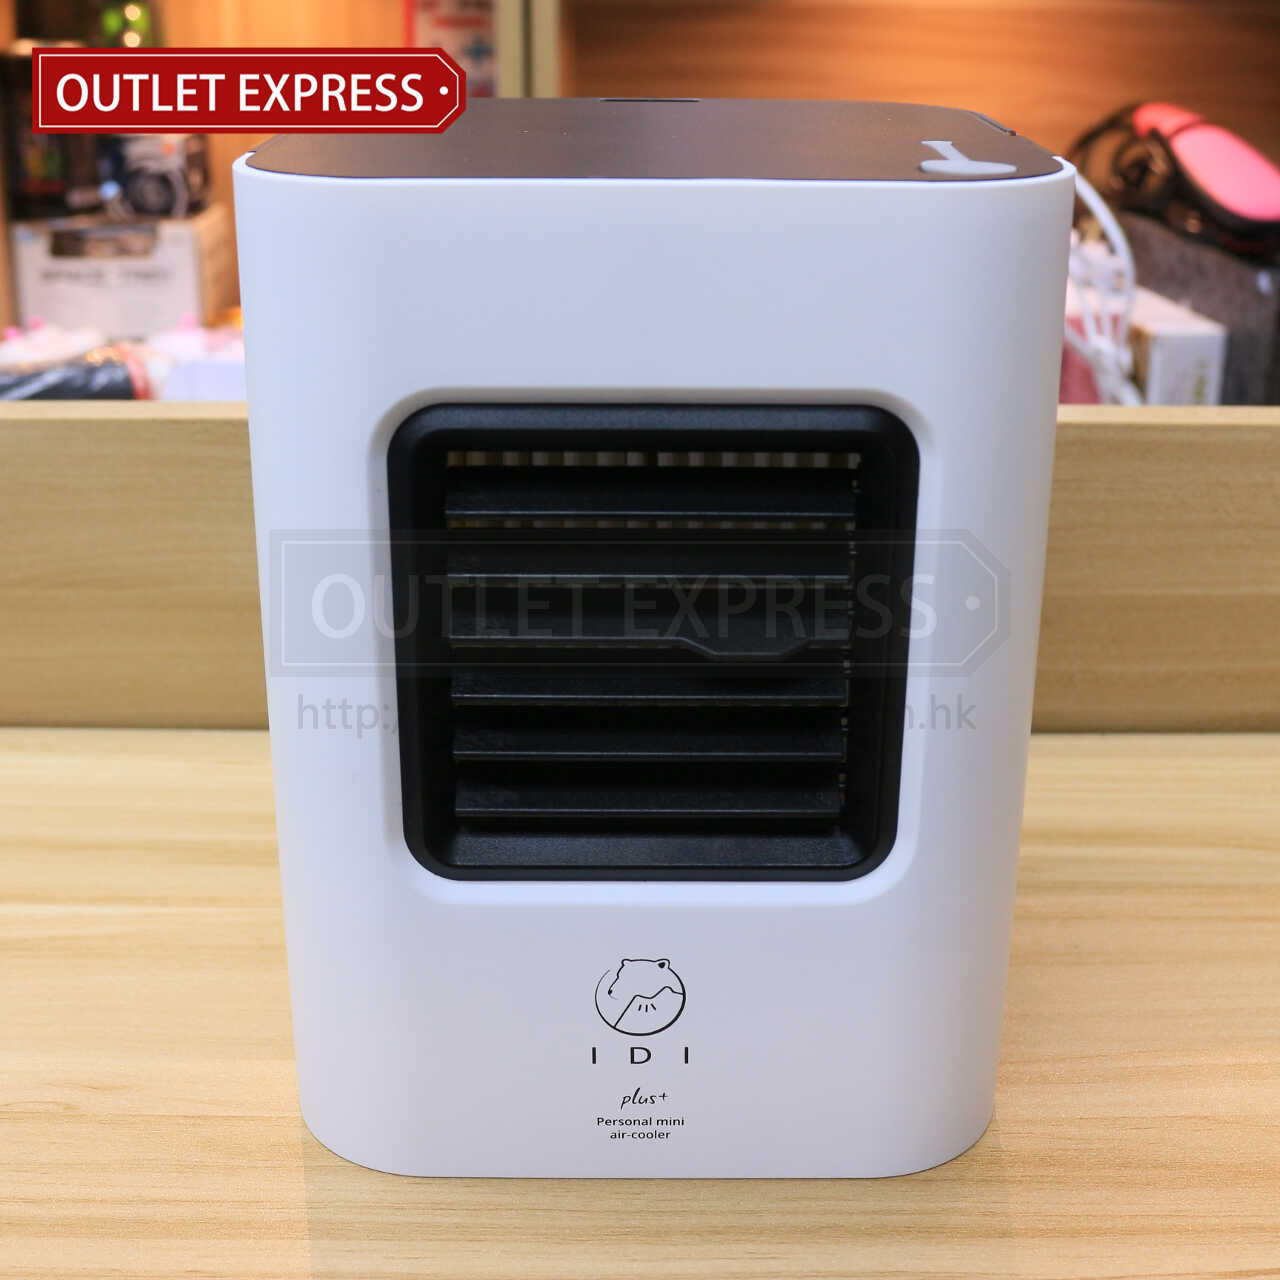 IDI USB 納米攜帶冷風機 正面圖- Outlet Express HK生活百貨城實拍相片